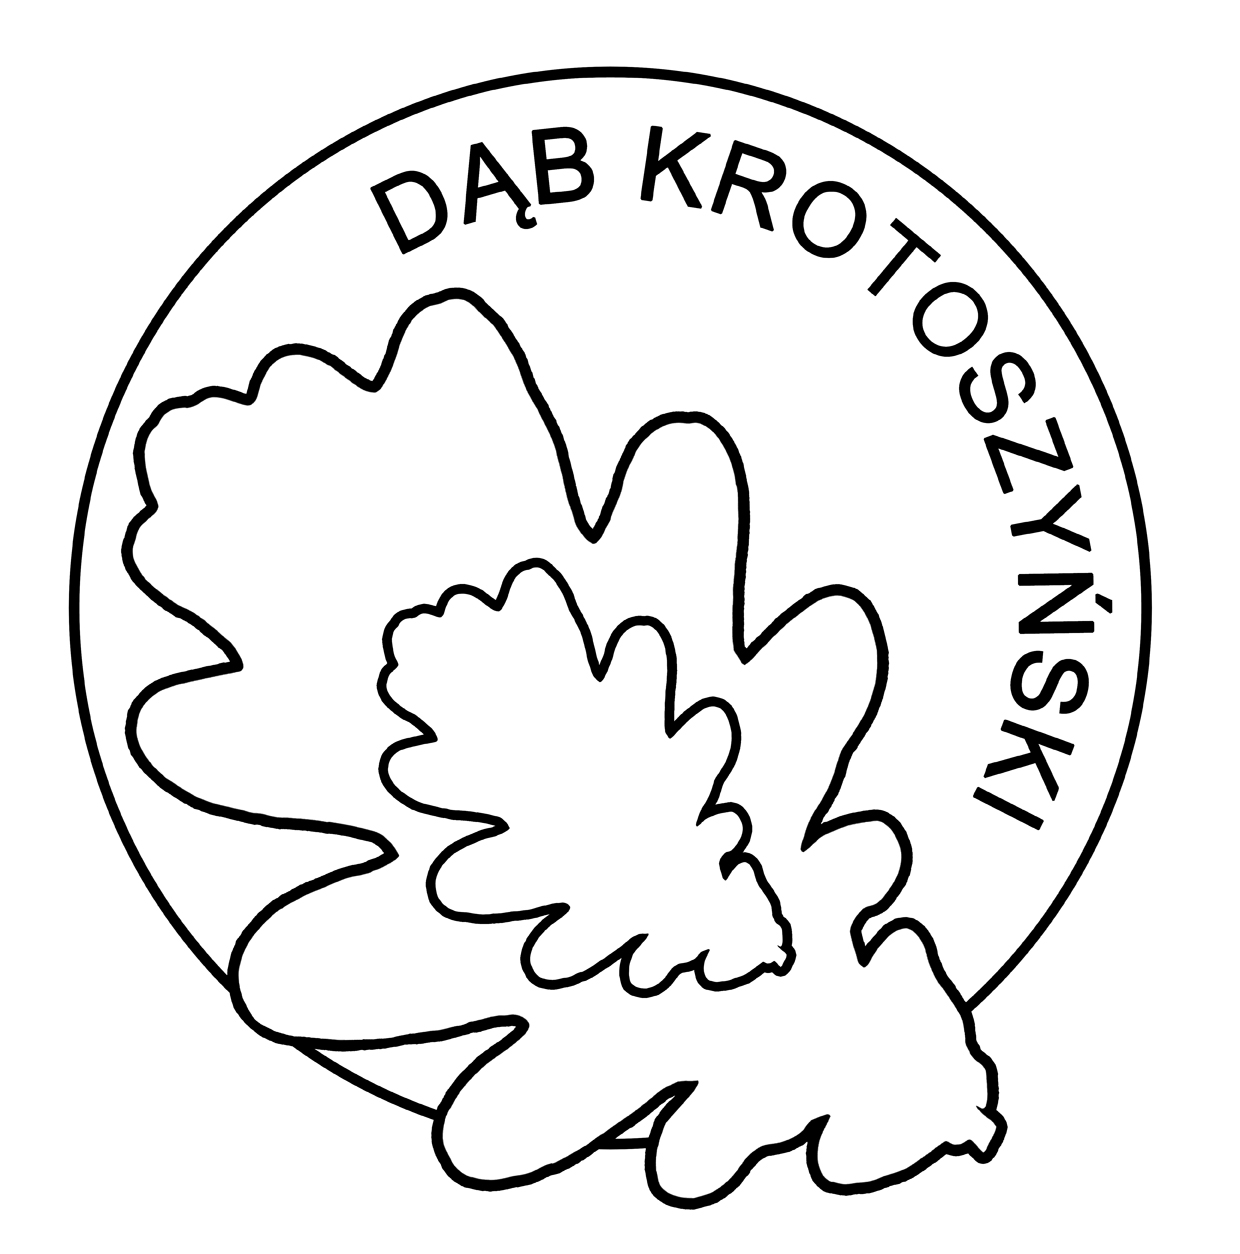 Торговая марка "Dąb Krotoszyński".  Архив RDSF в Познани.